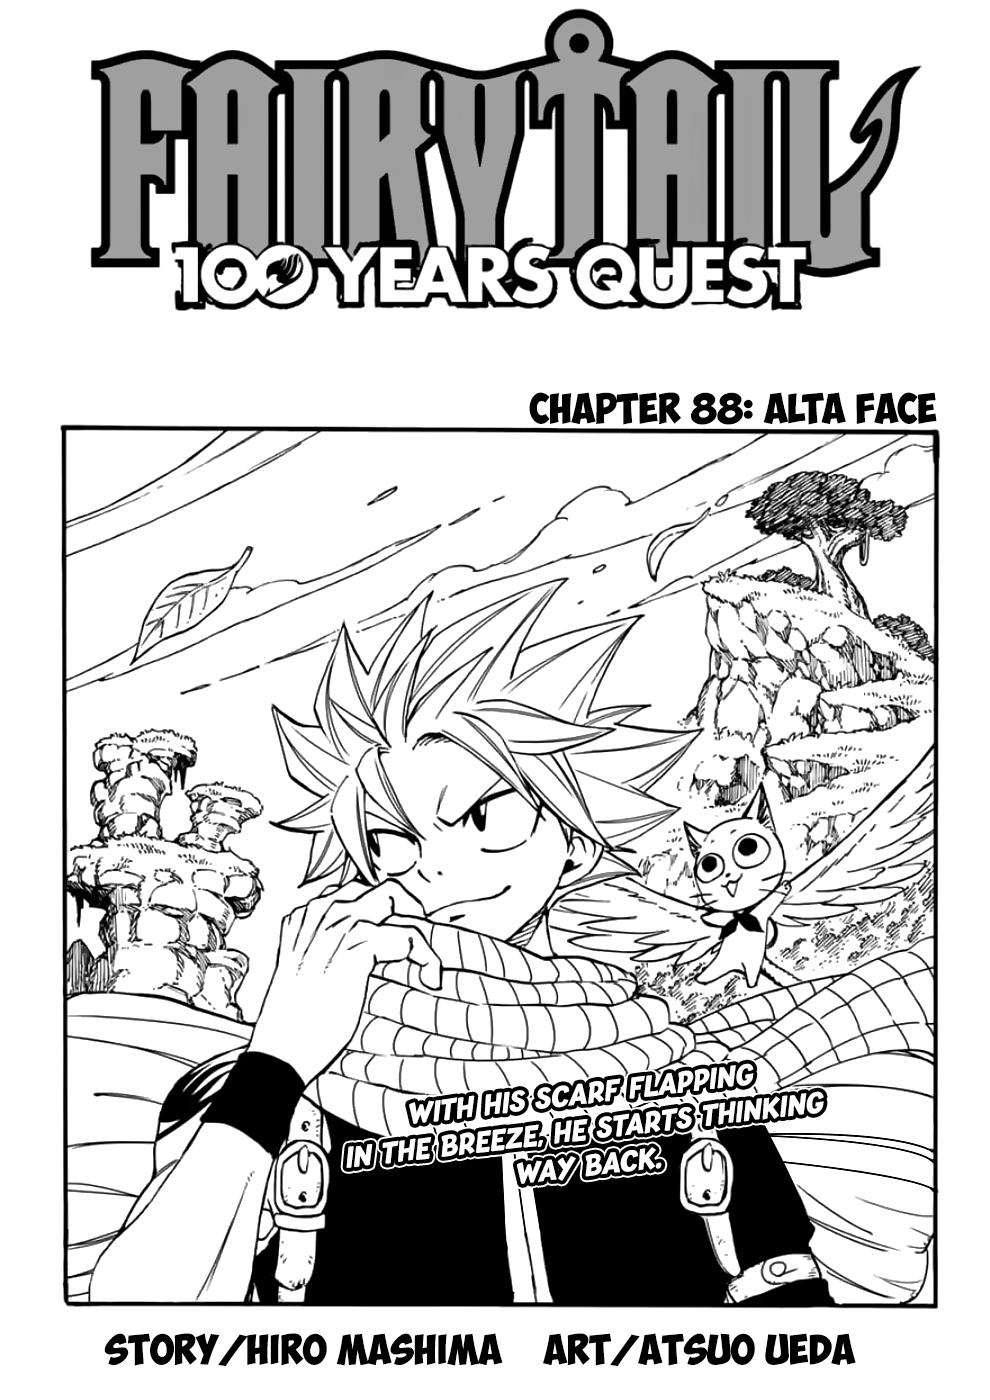 Fairy Tail 100 Years Quest Manga Volume 10